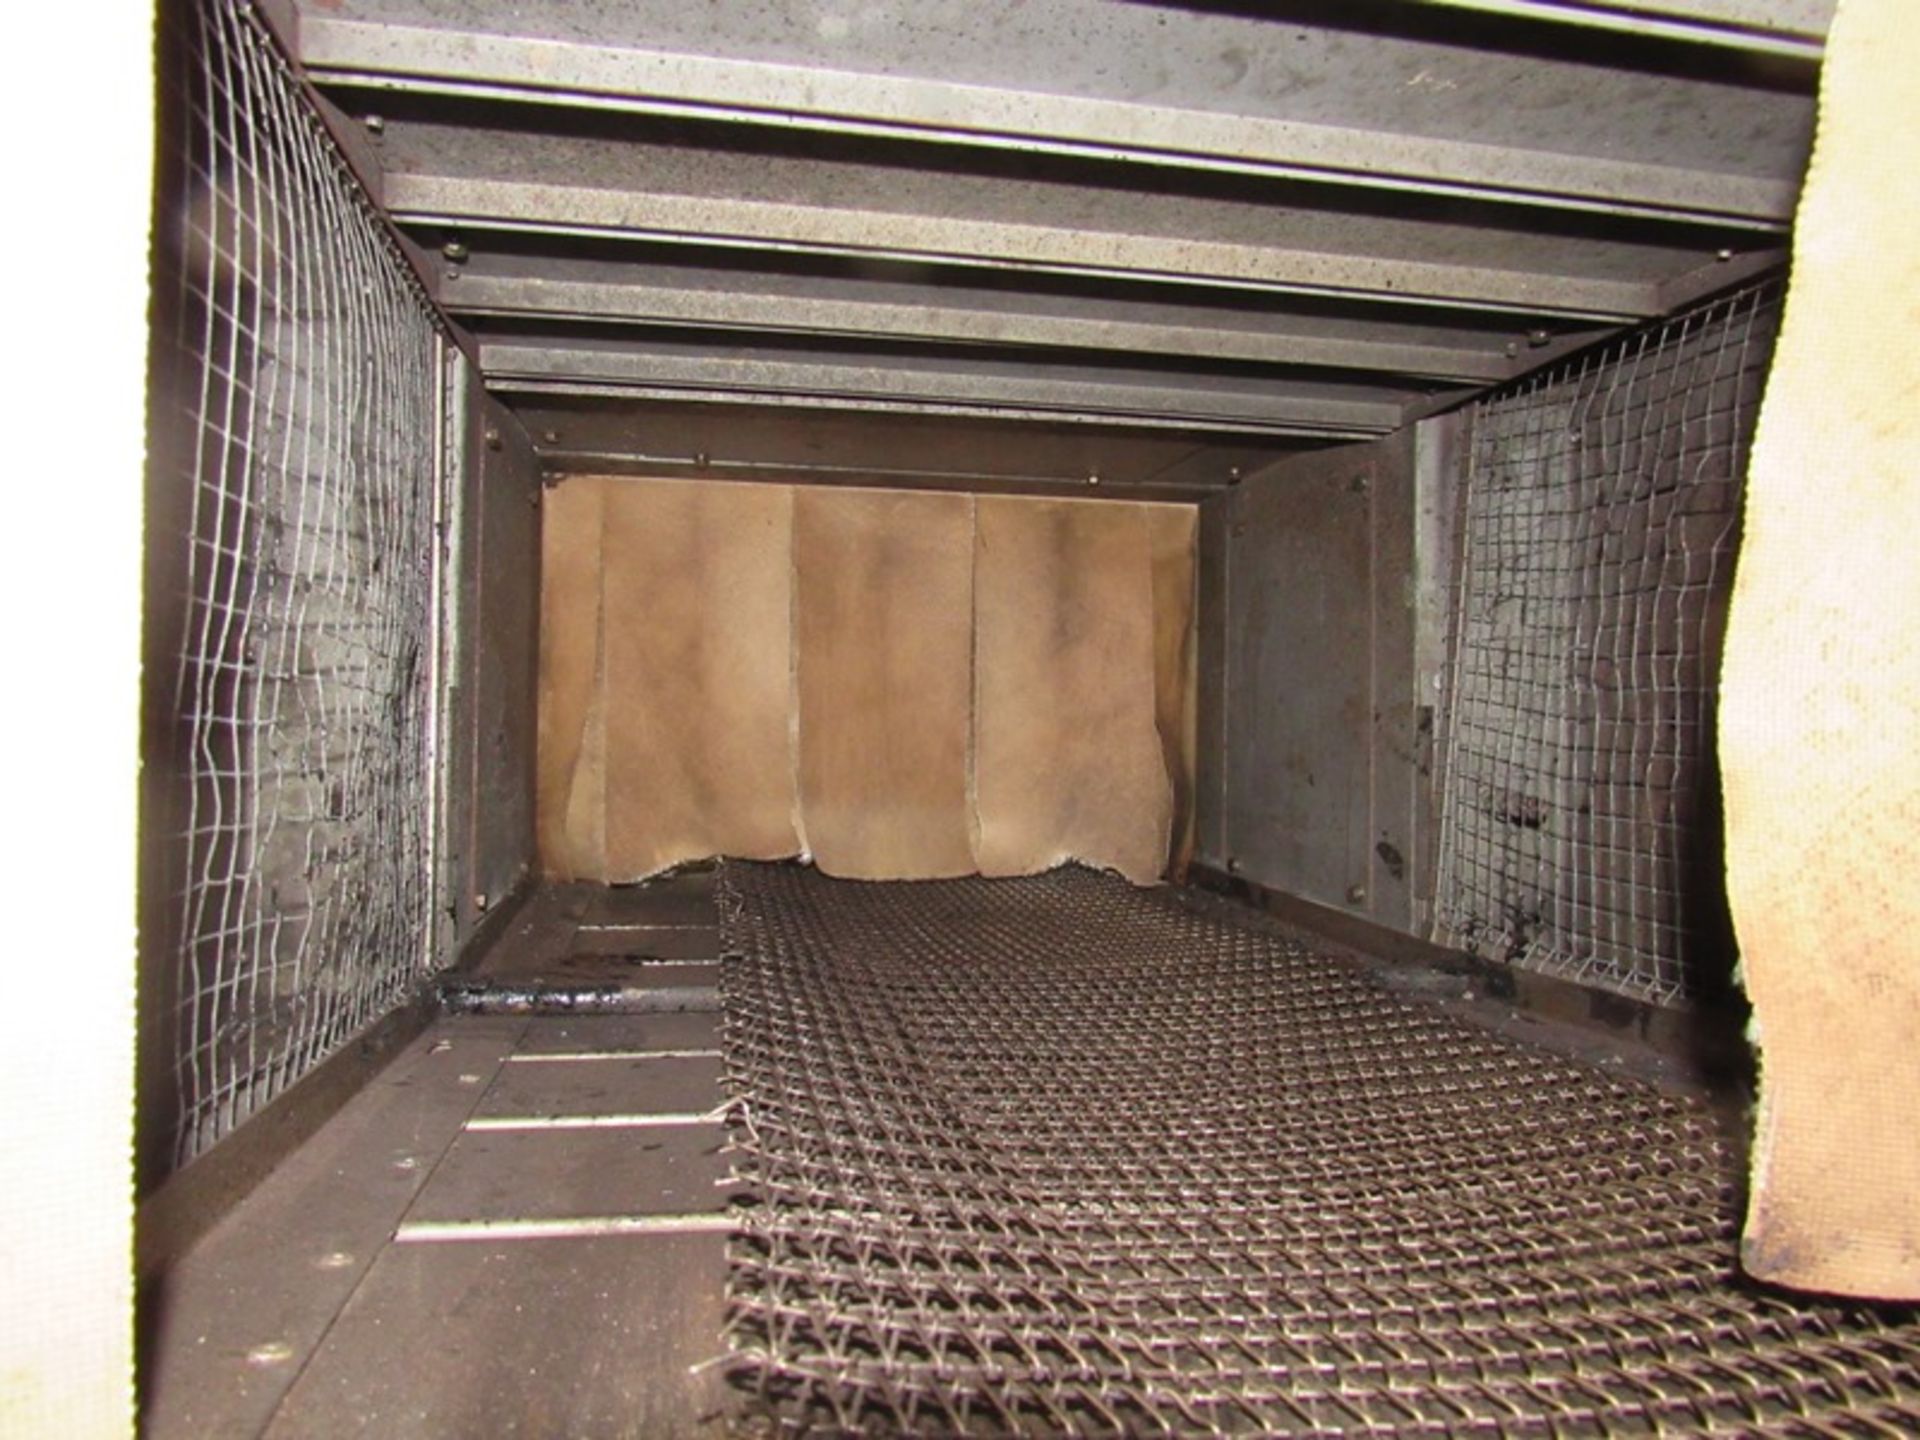 Shanklin Mdl. T6H Shrink Tunnel, Ser. #T12148-01, 18" W X 10" T X 30" L tunnel, 10 1/2" W - Image 3 of 3